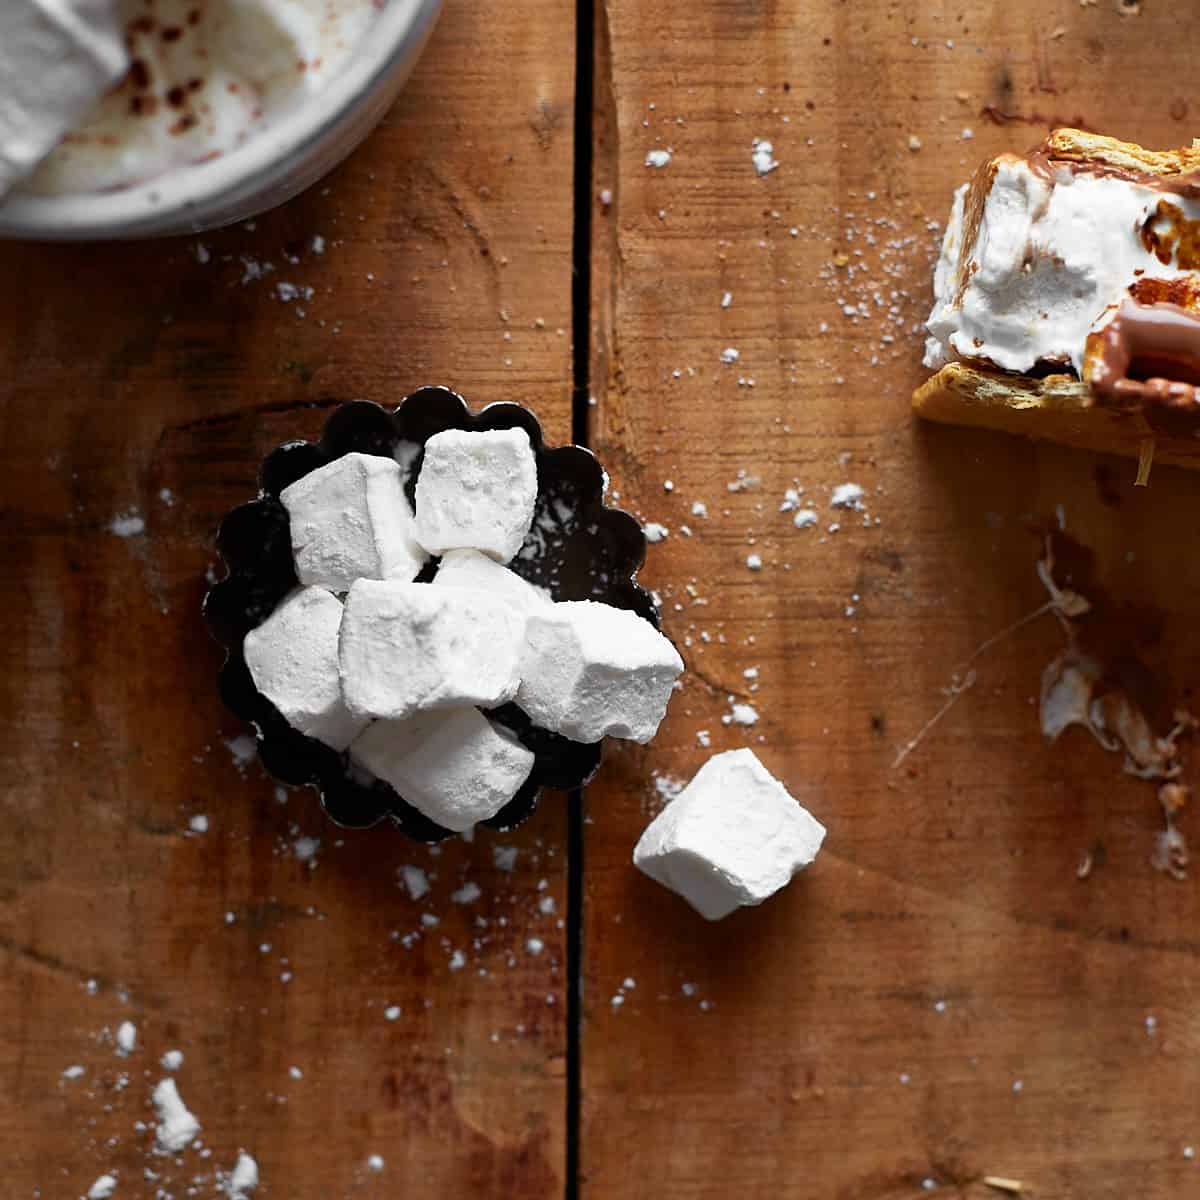 Mini marshmallows on a wooden background